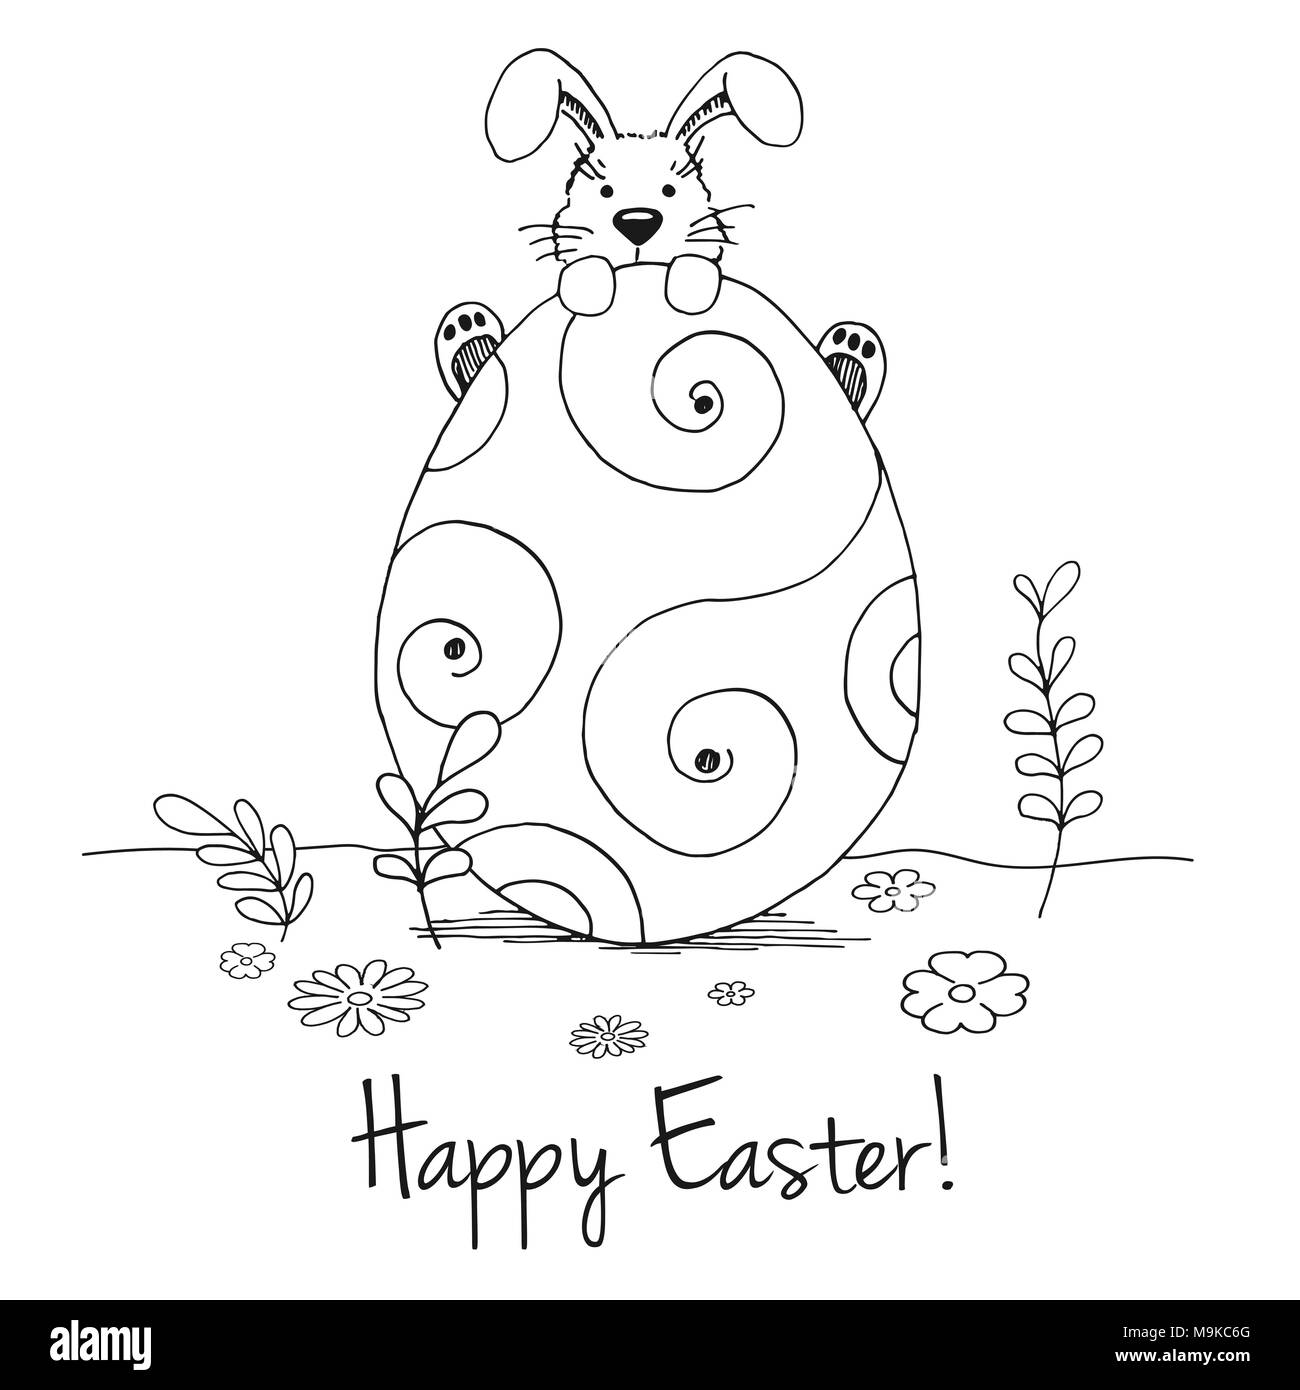 Printable Wall Art – Easter Bunny Sketch – Home and Garden